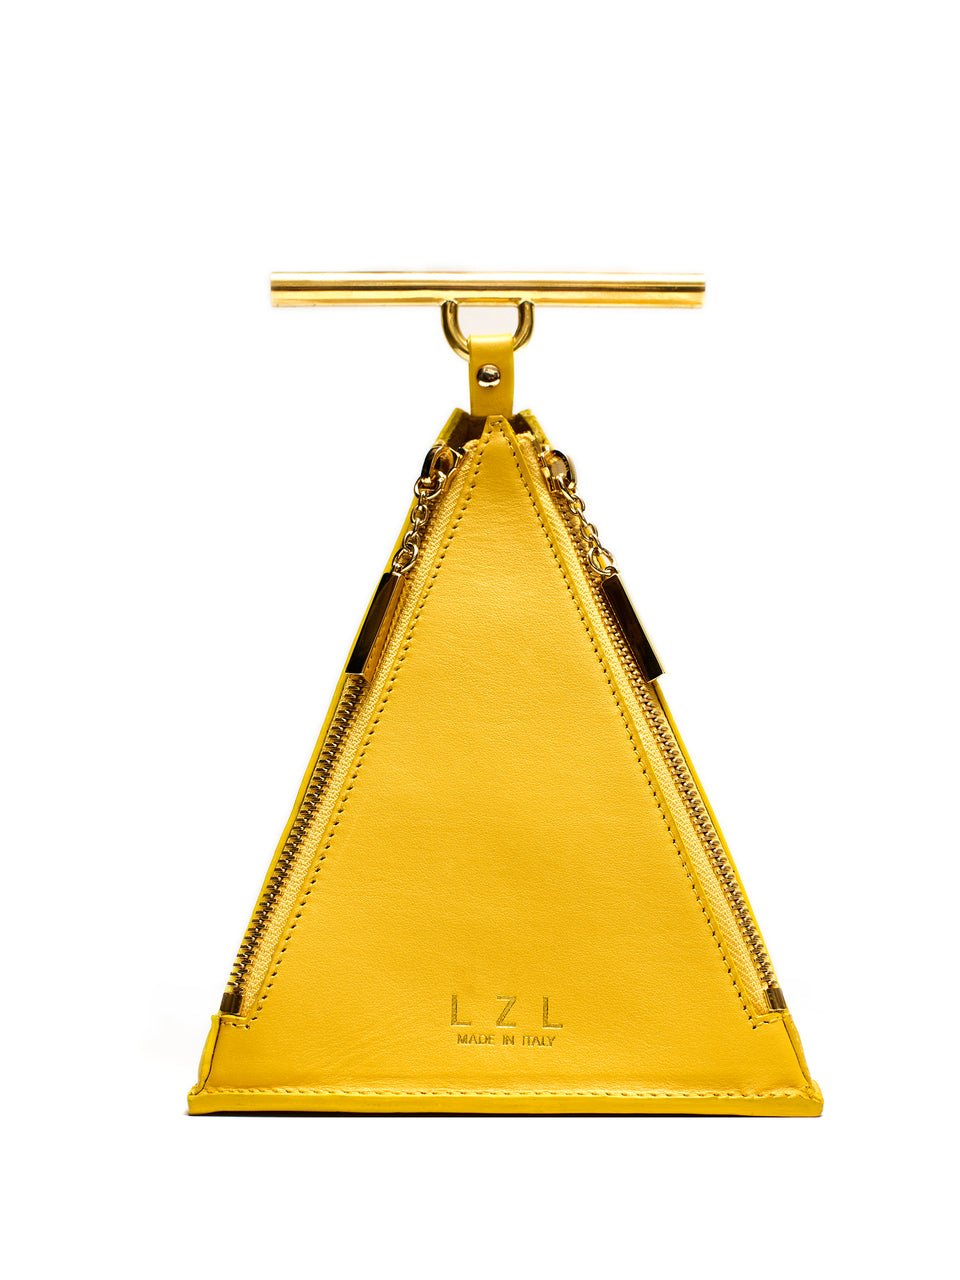 LZL Pyramid Bag 002 Yellow - Front